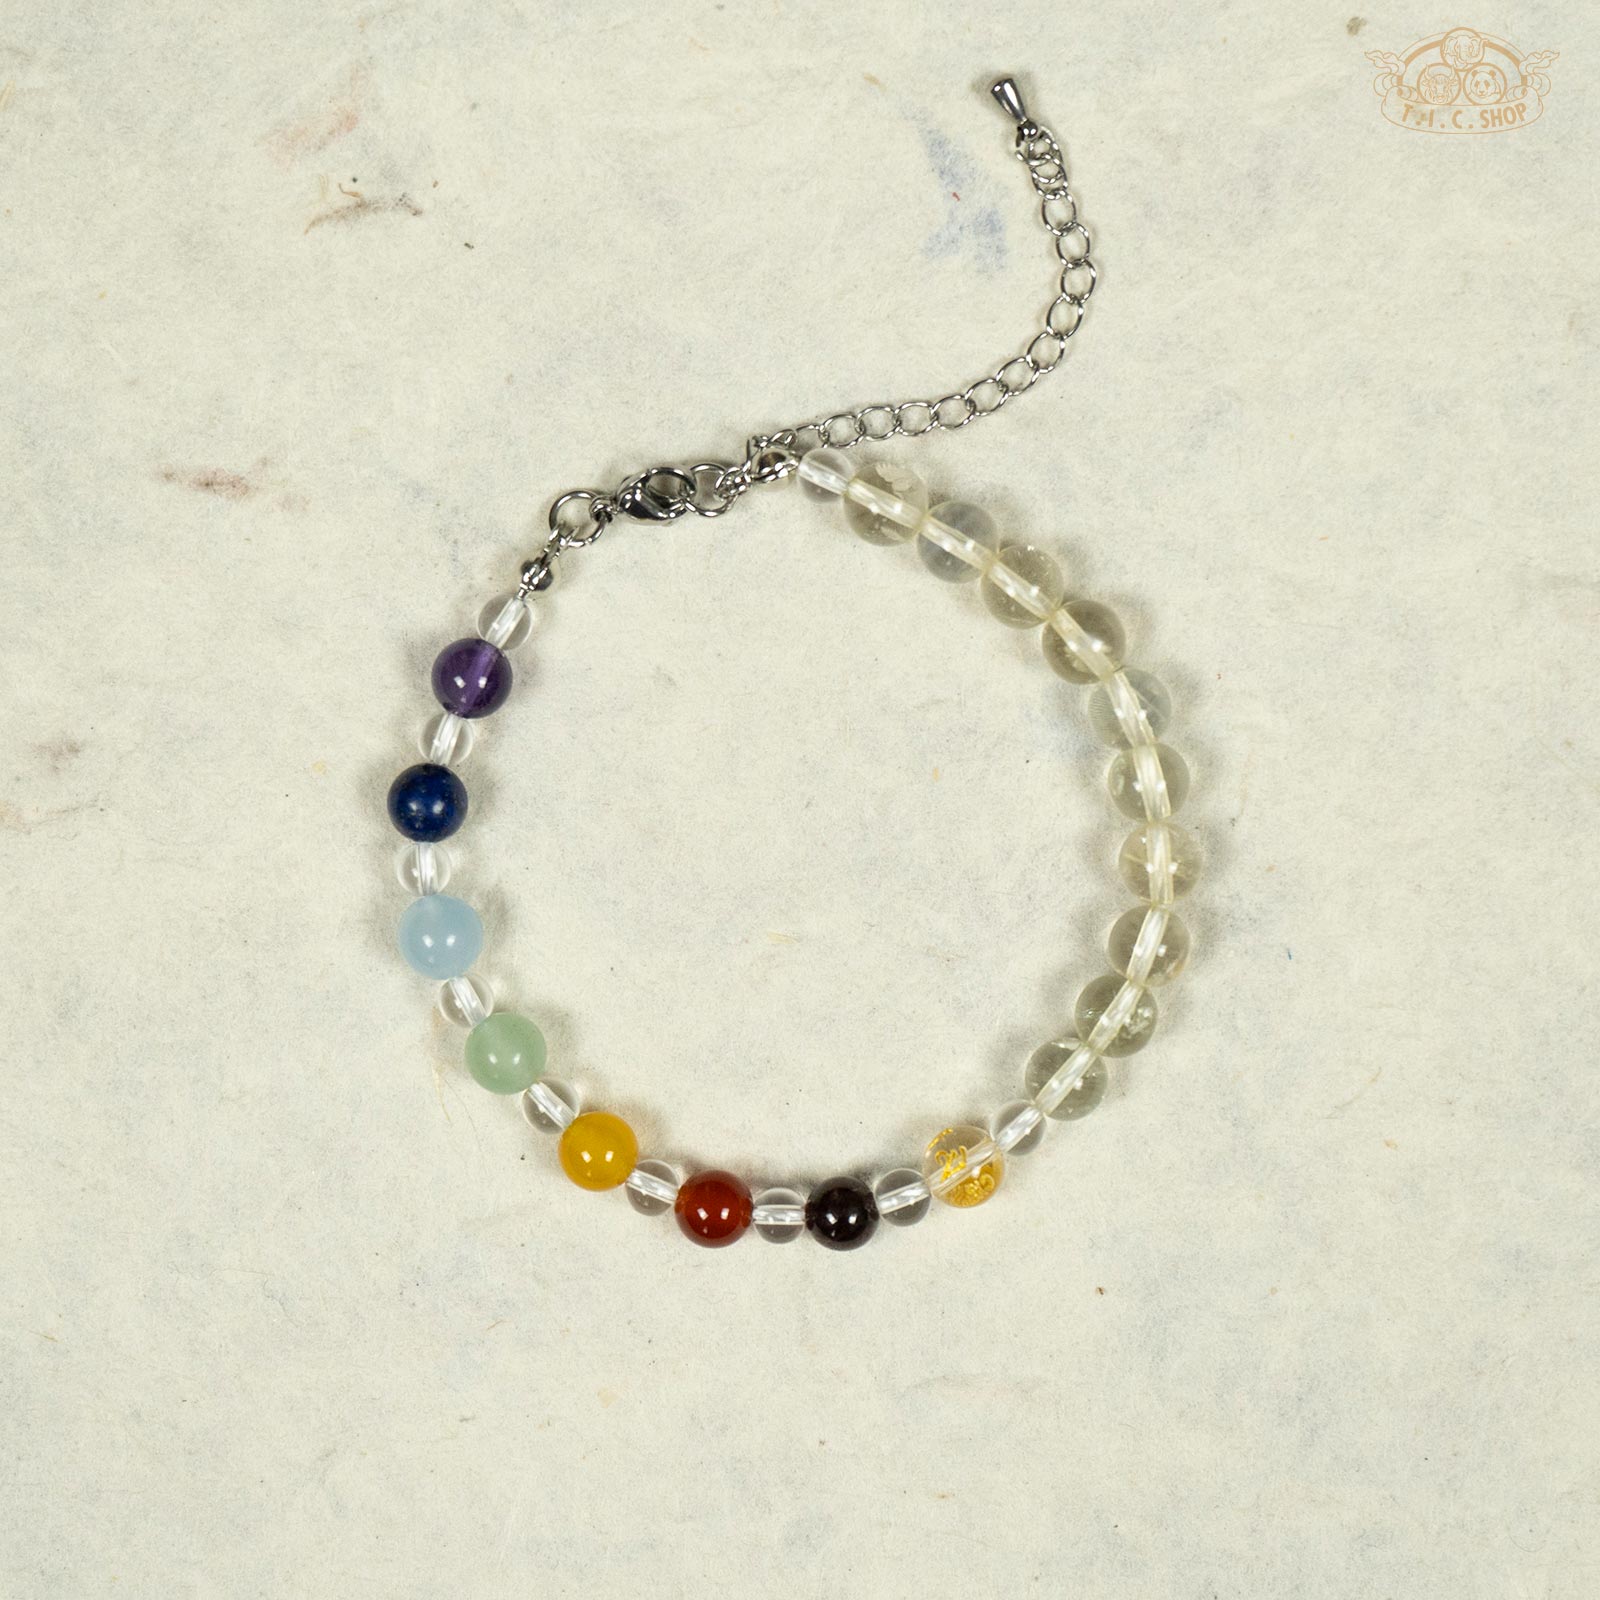 Seven Chakra 6mm Beads Bracelet with Om Mantra